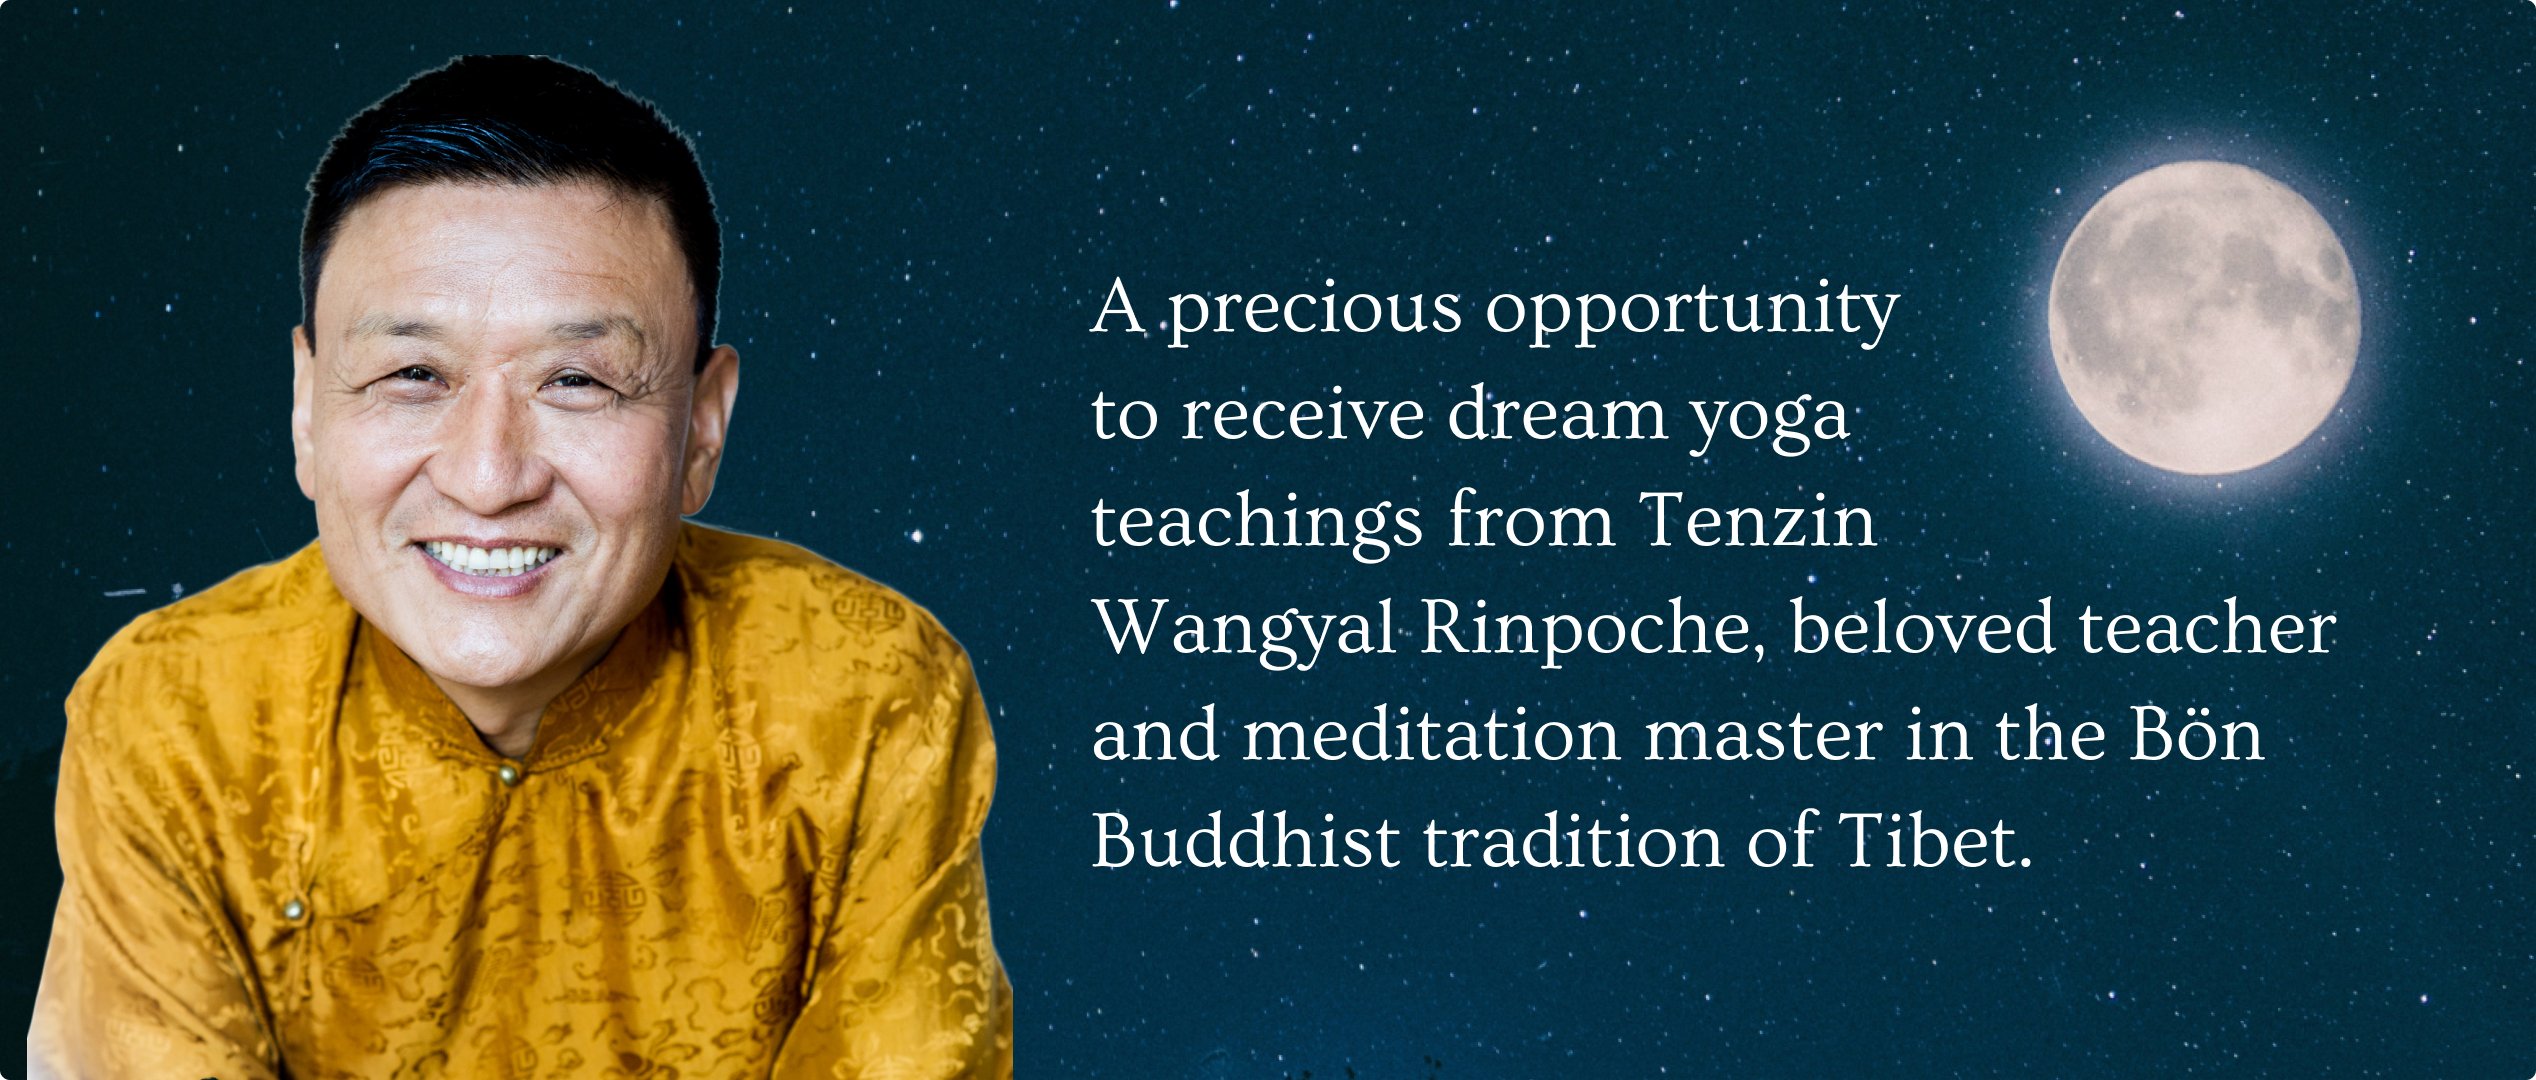 tenzin wangyal rinpoche teachings